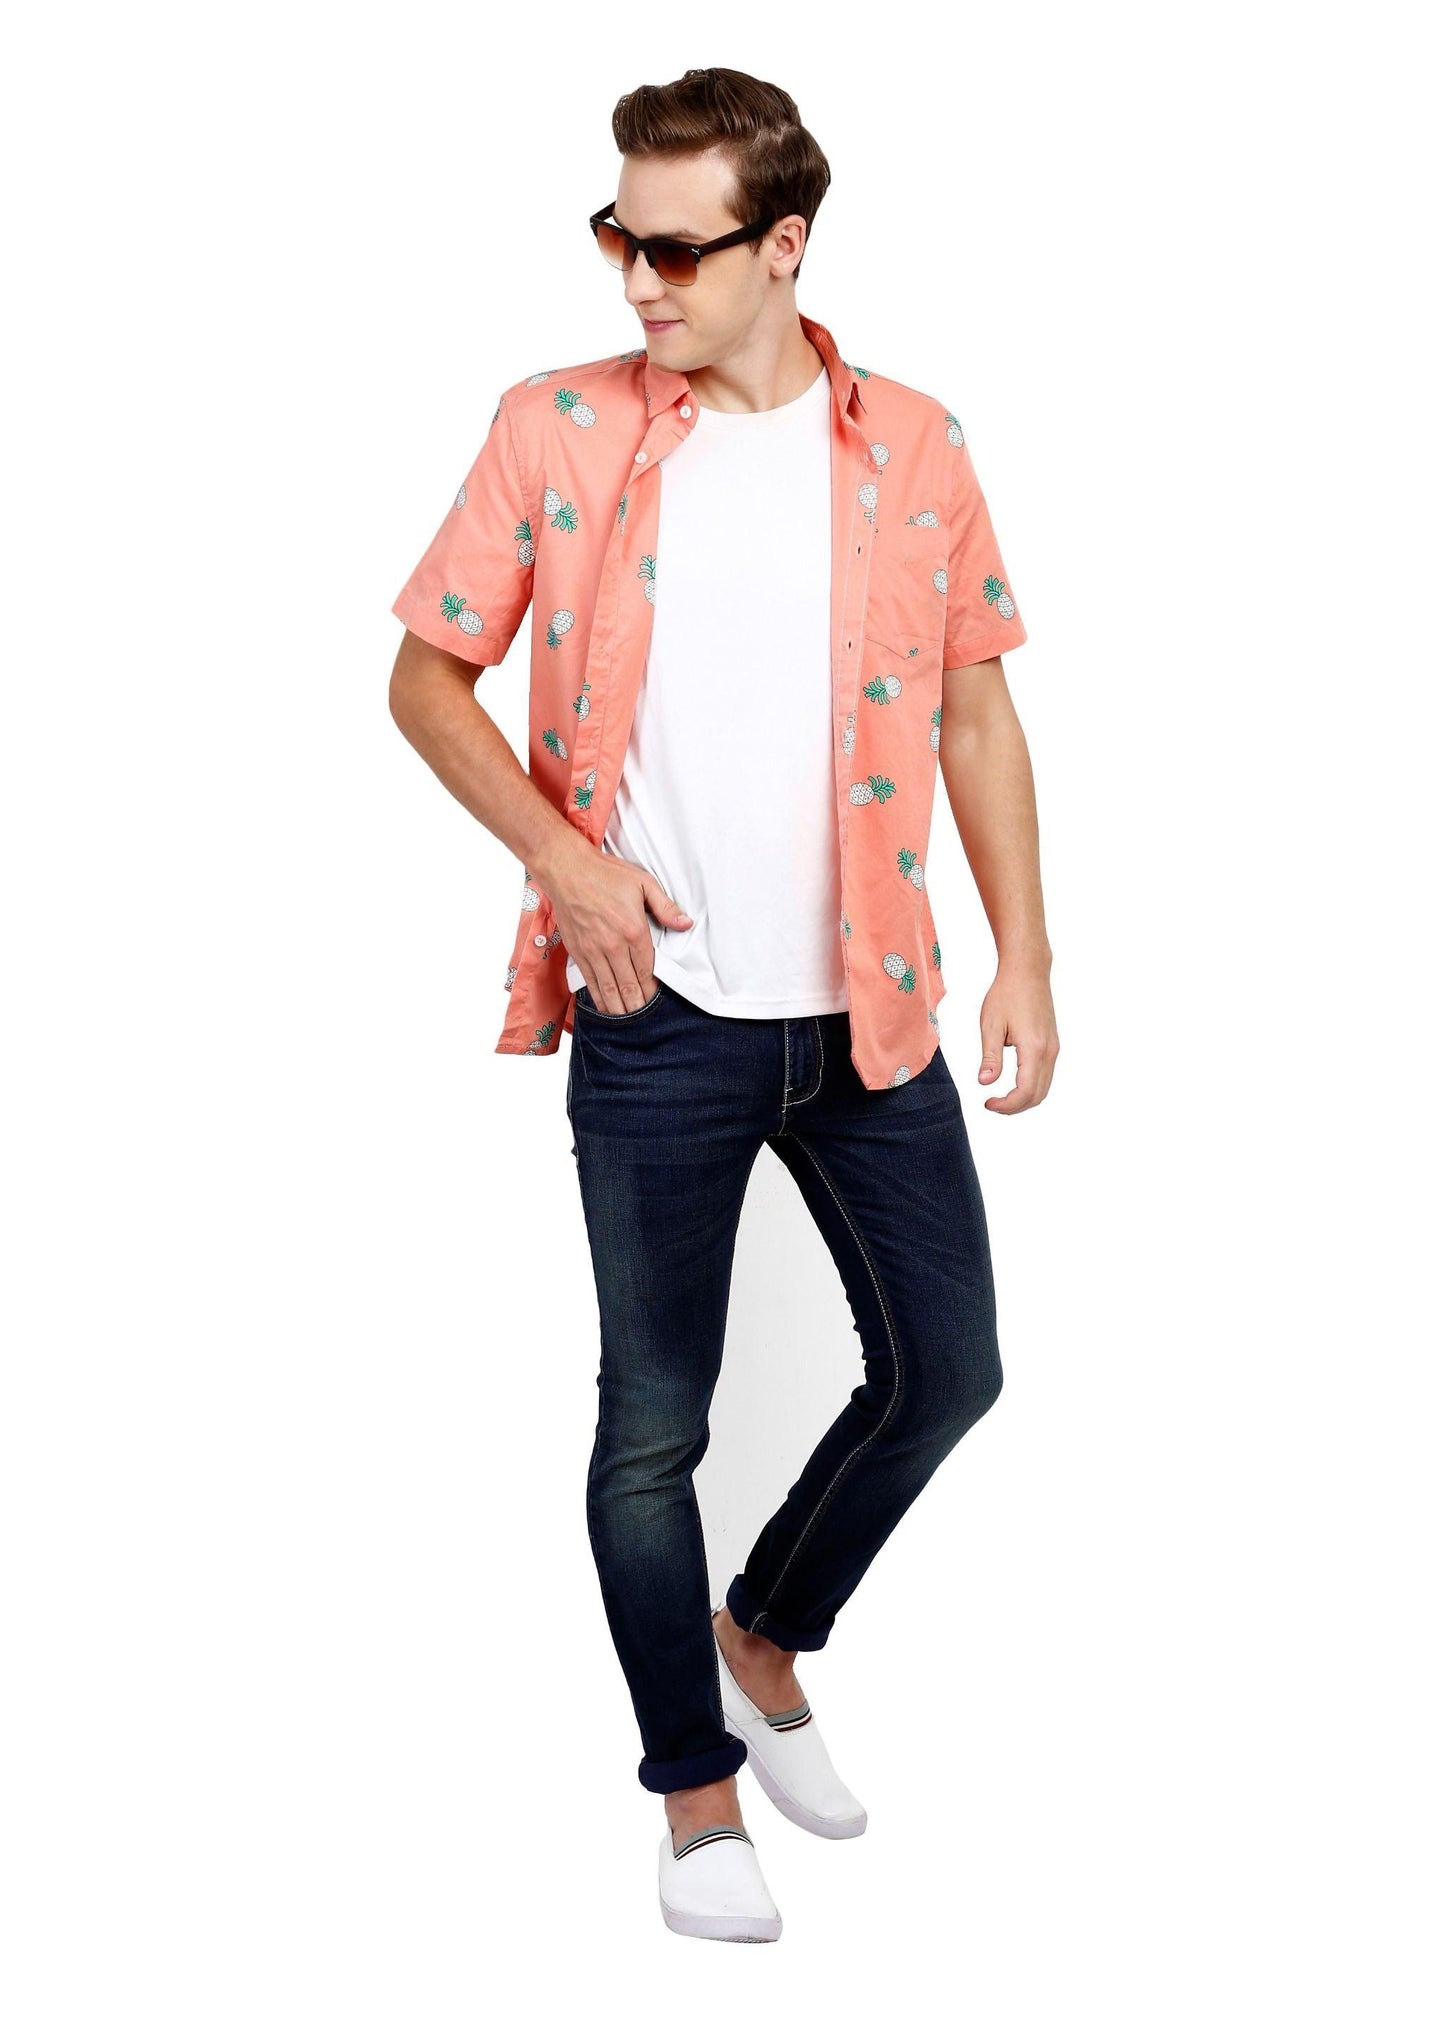 Tusok-pink-pineappleFeatured Shirt, Vacation-Printed Shirtimage-Peach Pineapple (5)